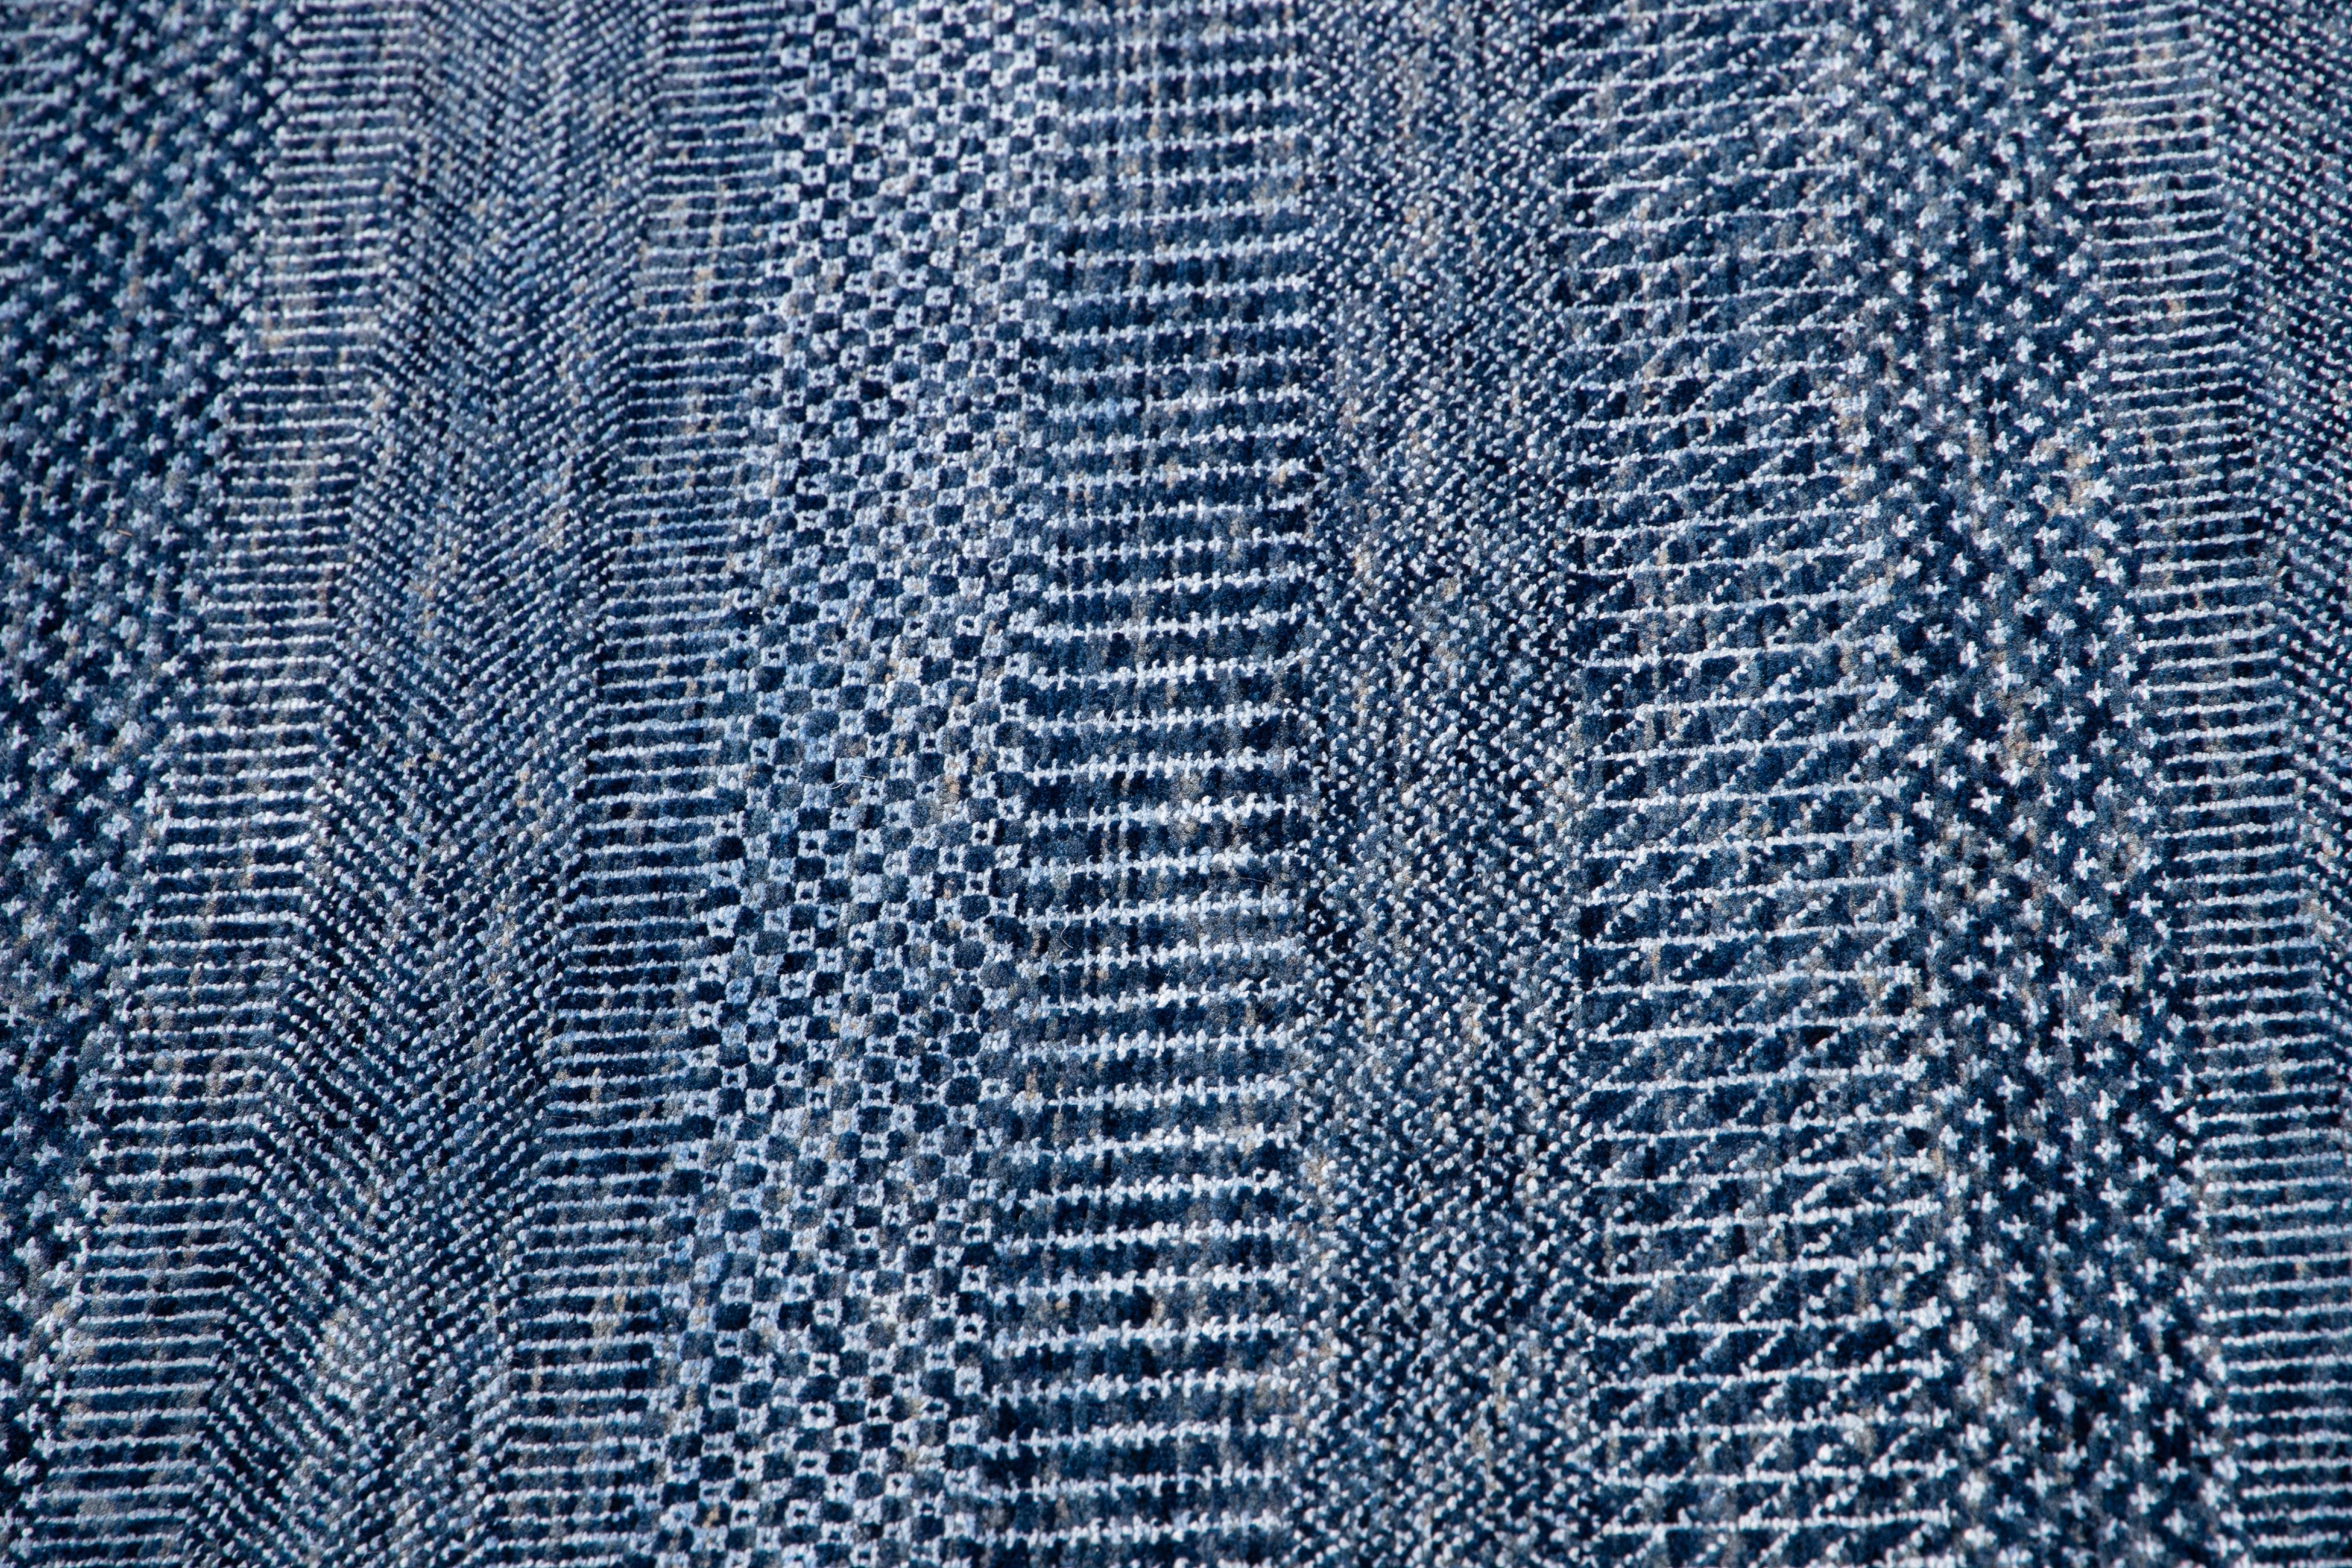 21st Century Modern Savannah Wool Round Rug In New Condition For Sale In Norwalk, CT